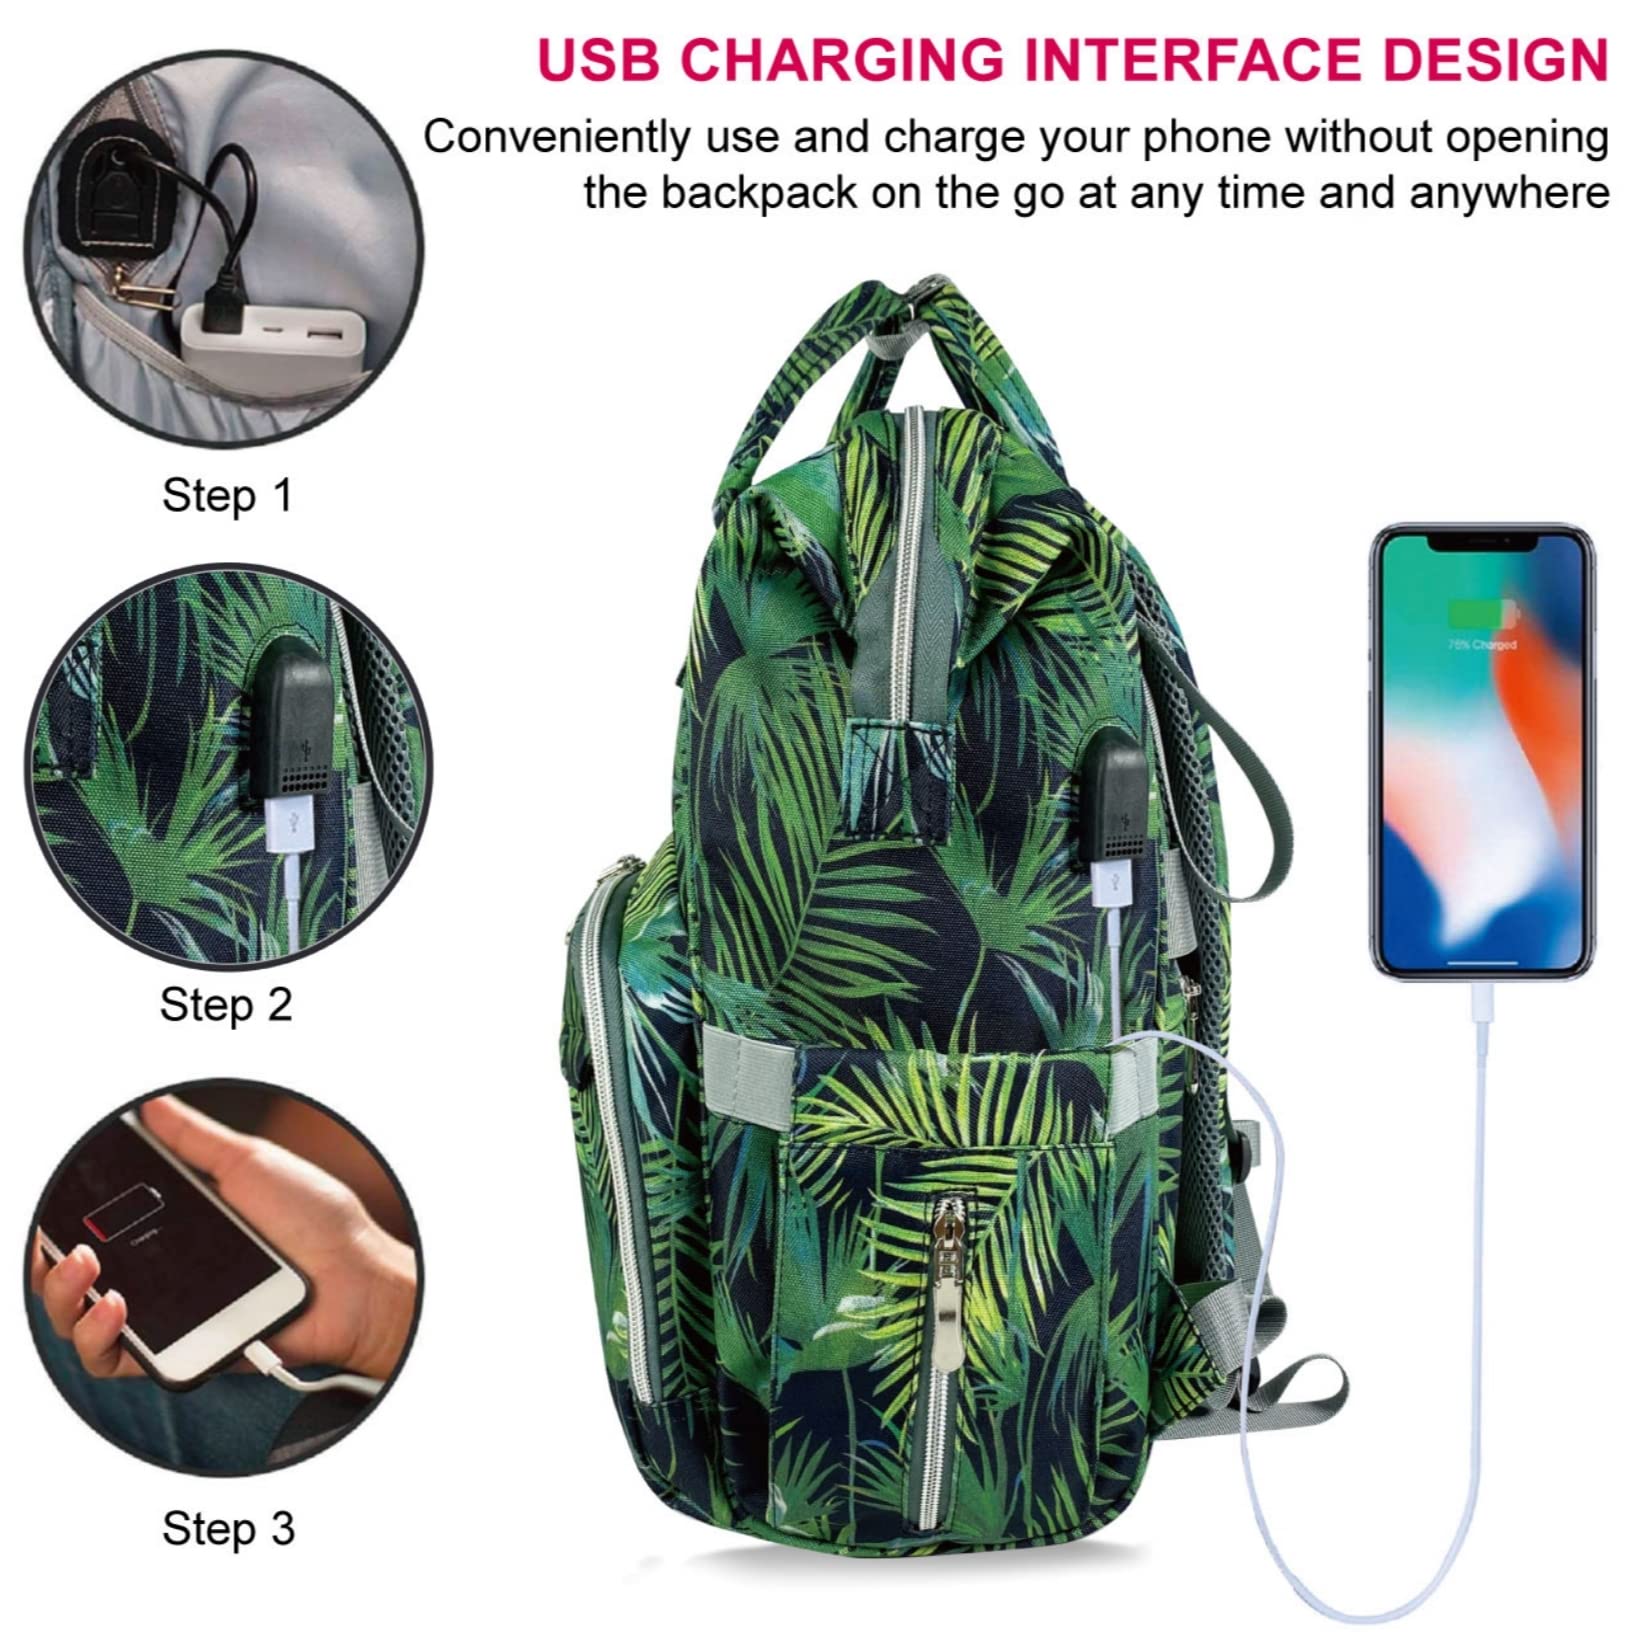 Mr. Peanut's Tili Dili Premium Diaper Backpack with USB Charging Port (Tropical)